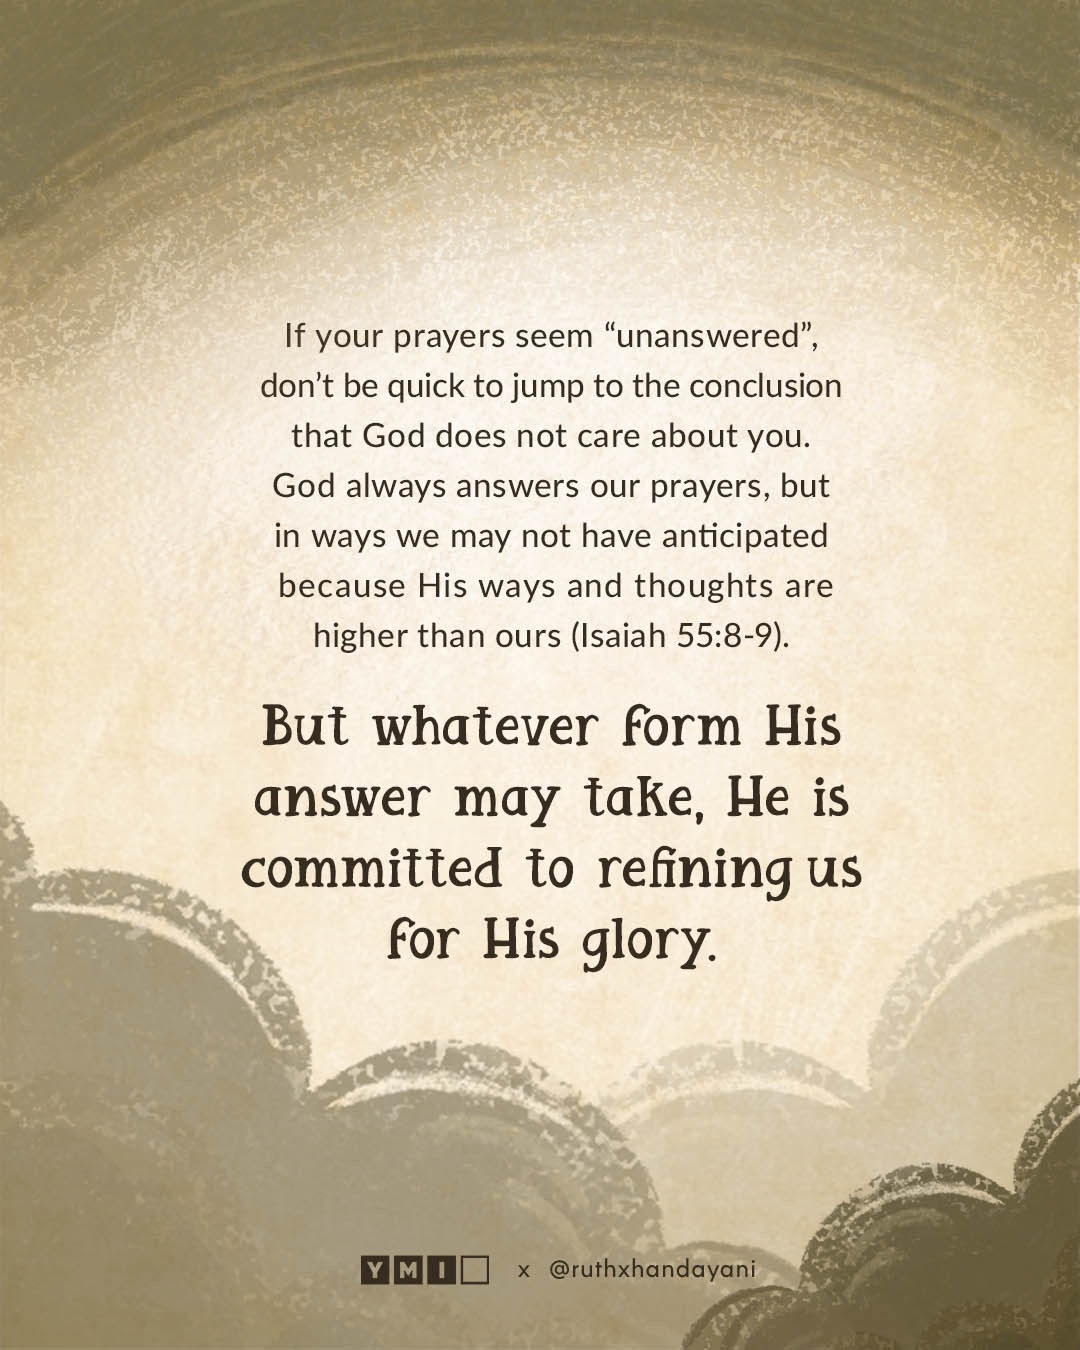 Explanation text on unanswered prayers